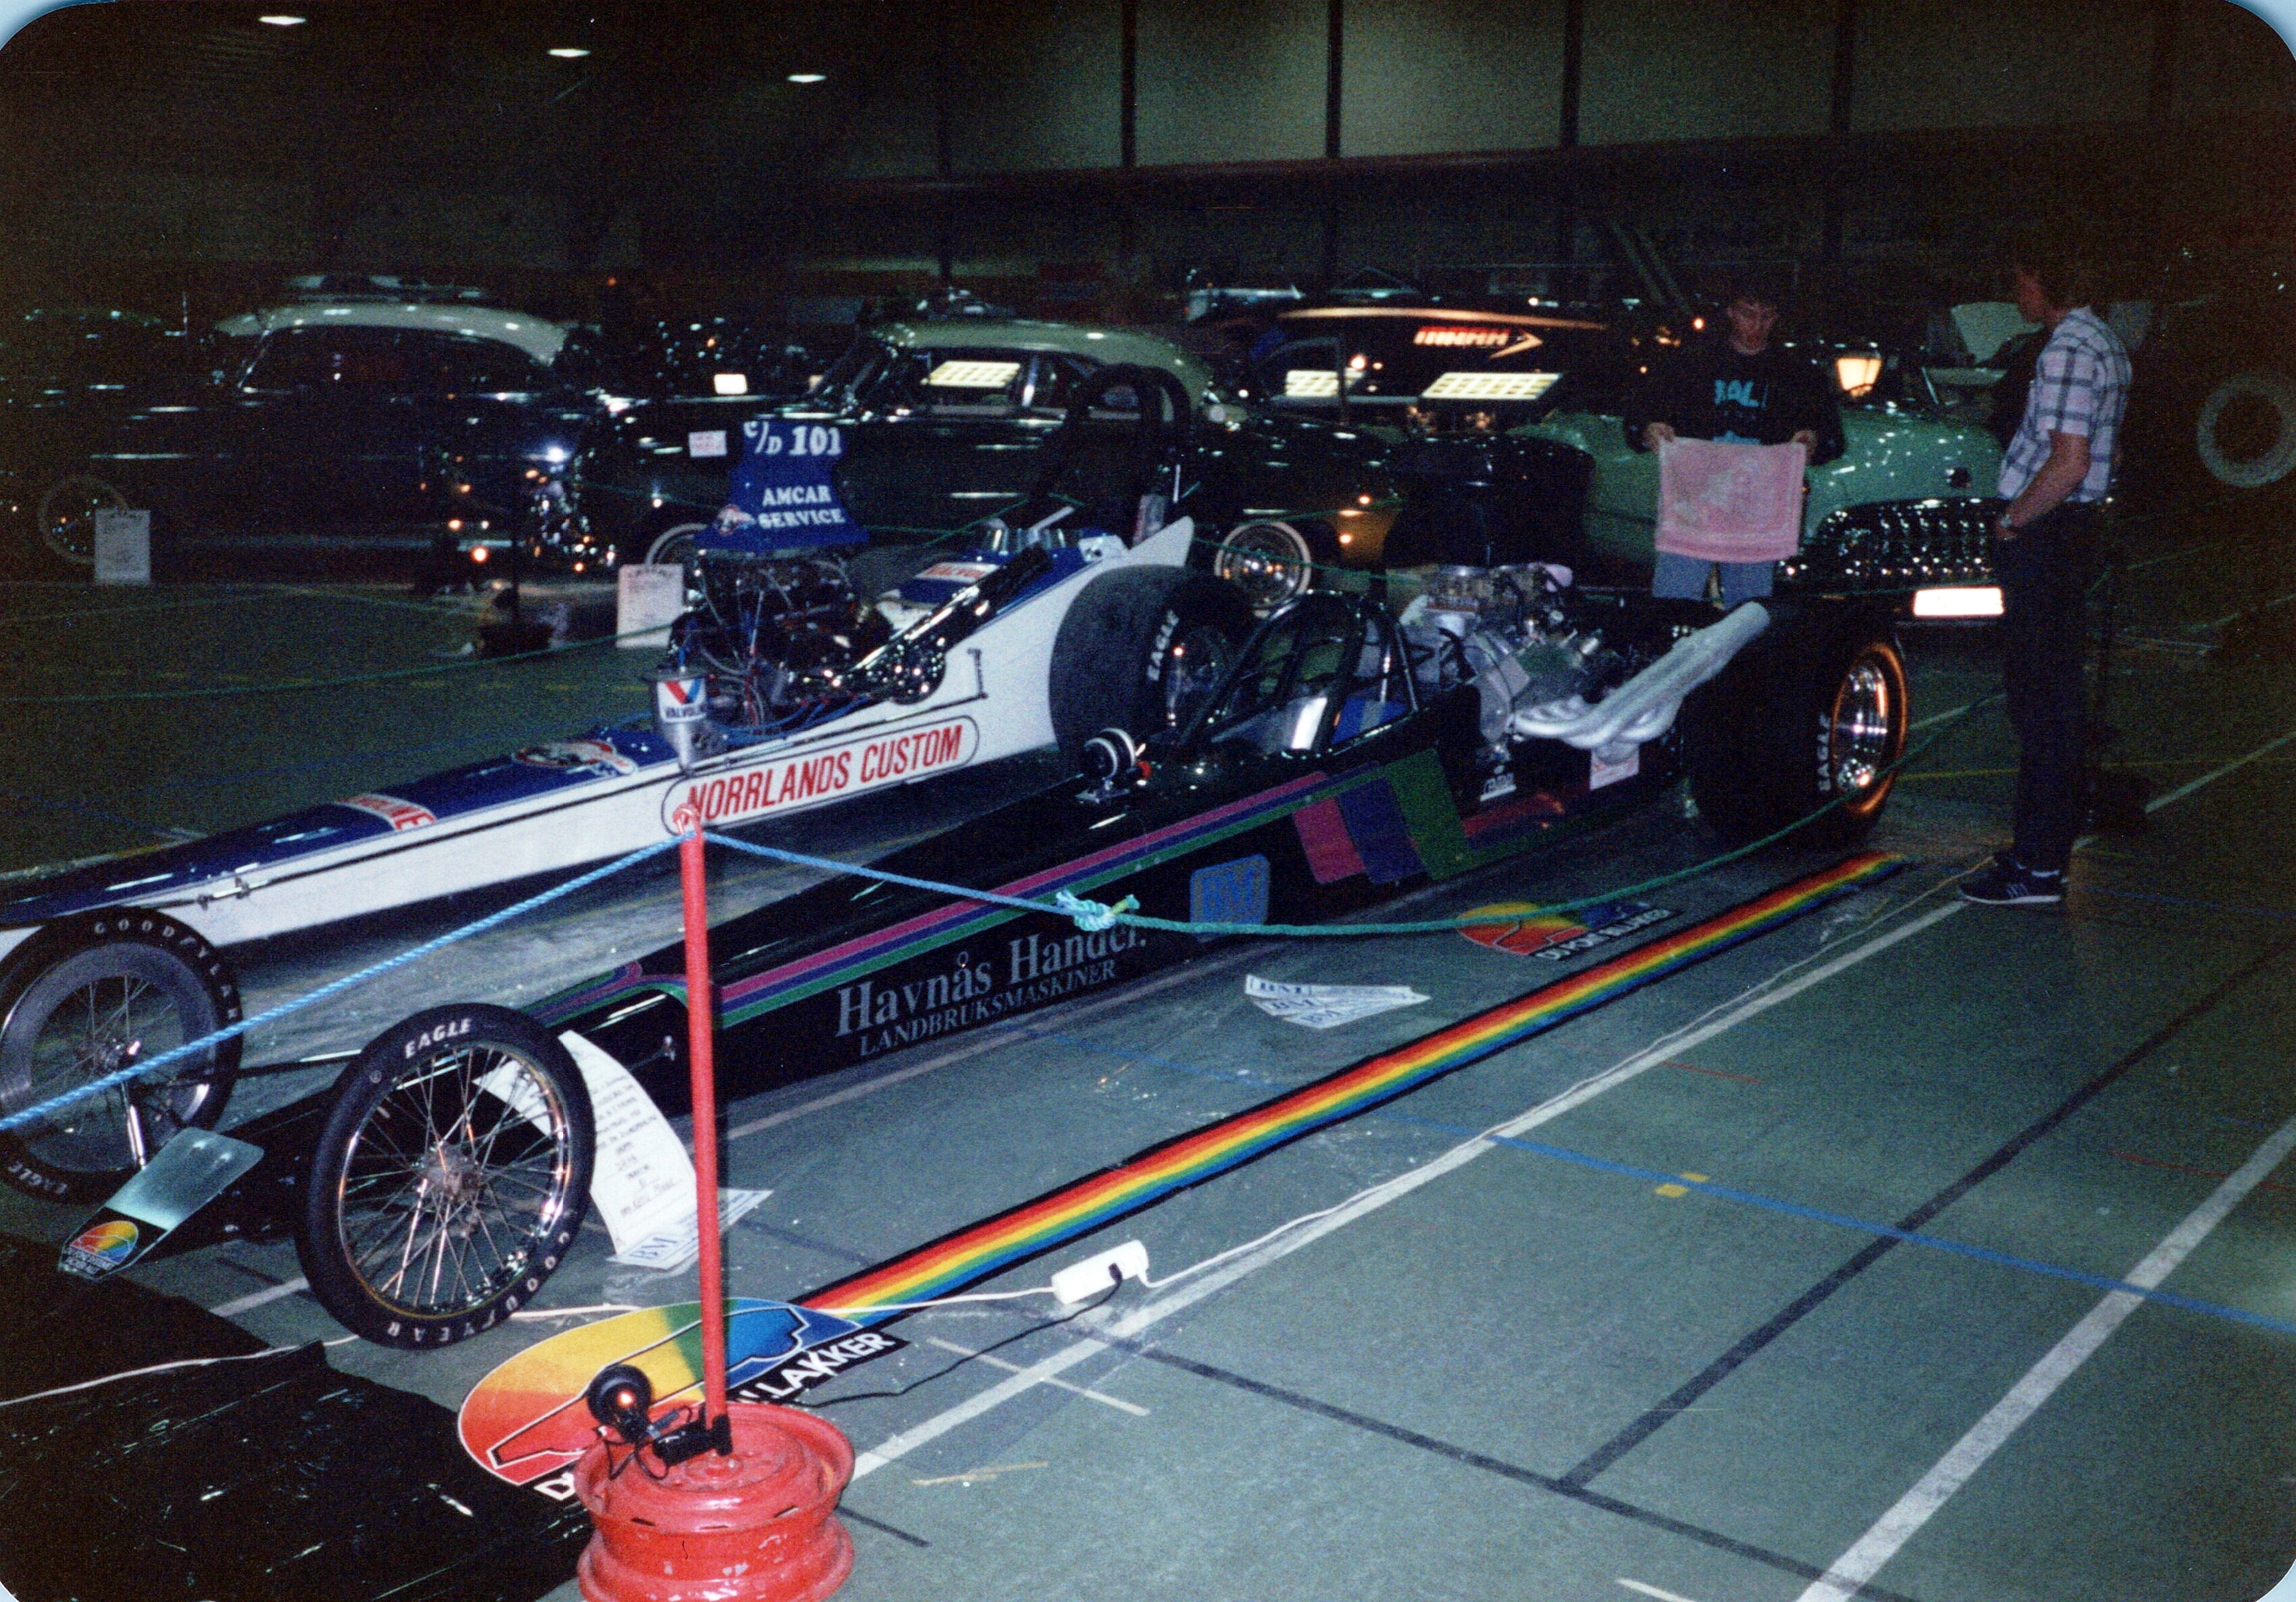 1989_Motorshow Askimhallen_0006.jpg